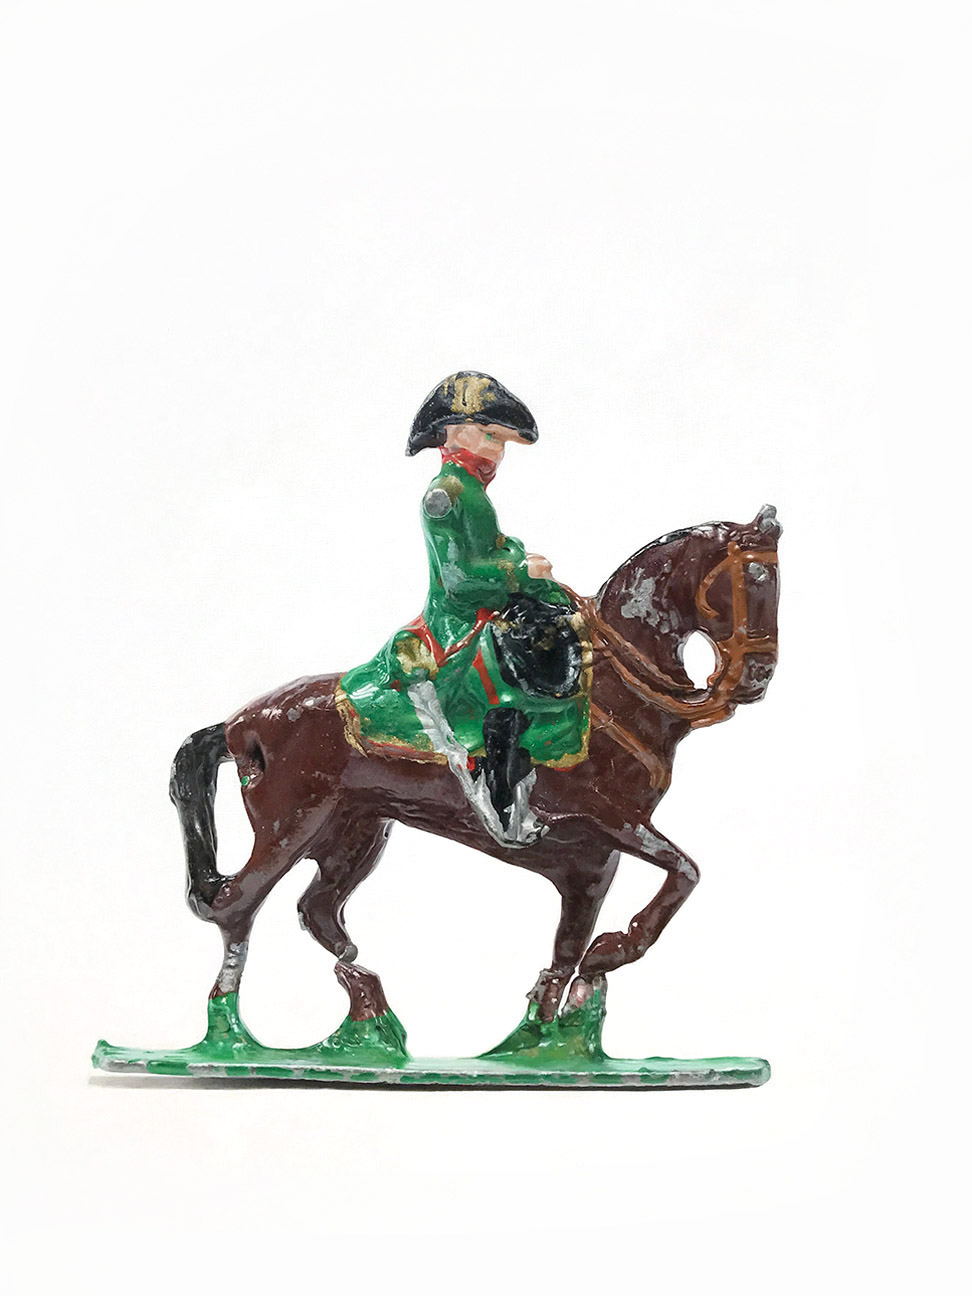 "Unknown Cavalry Officer"